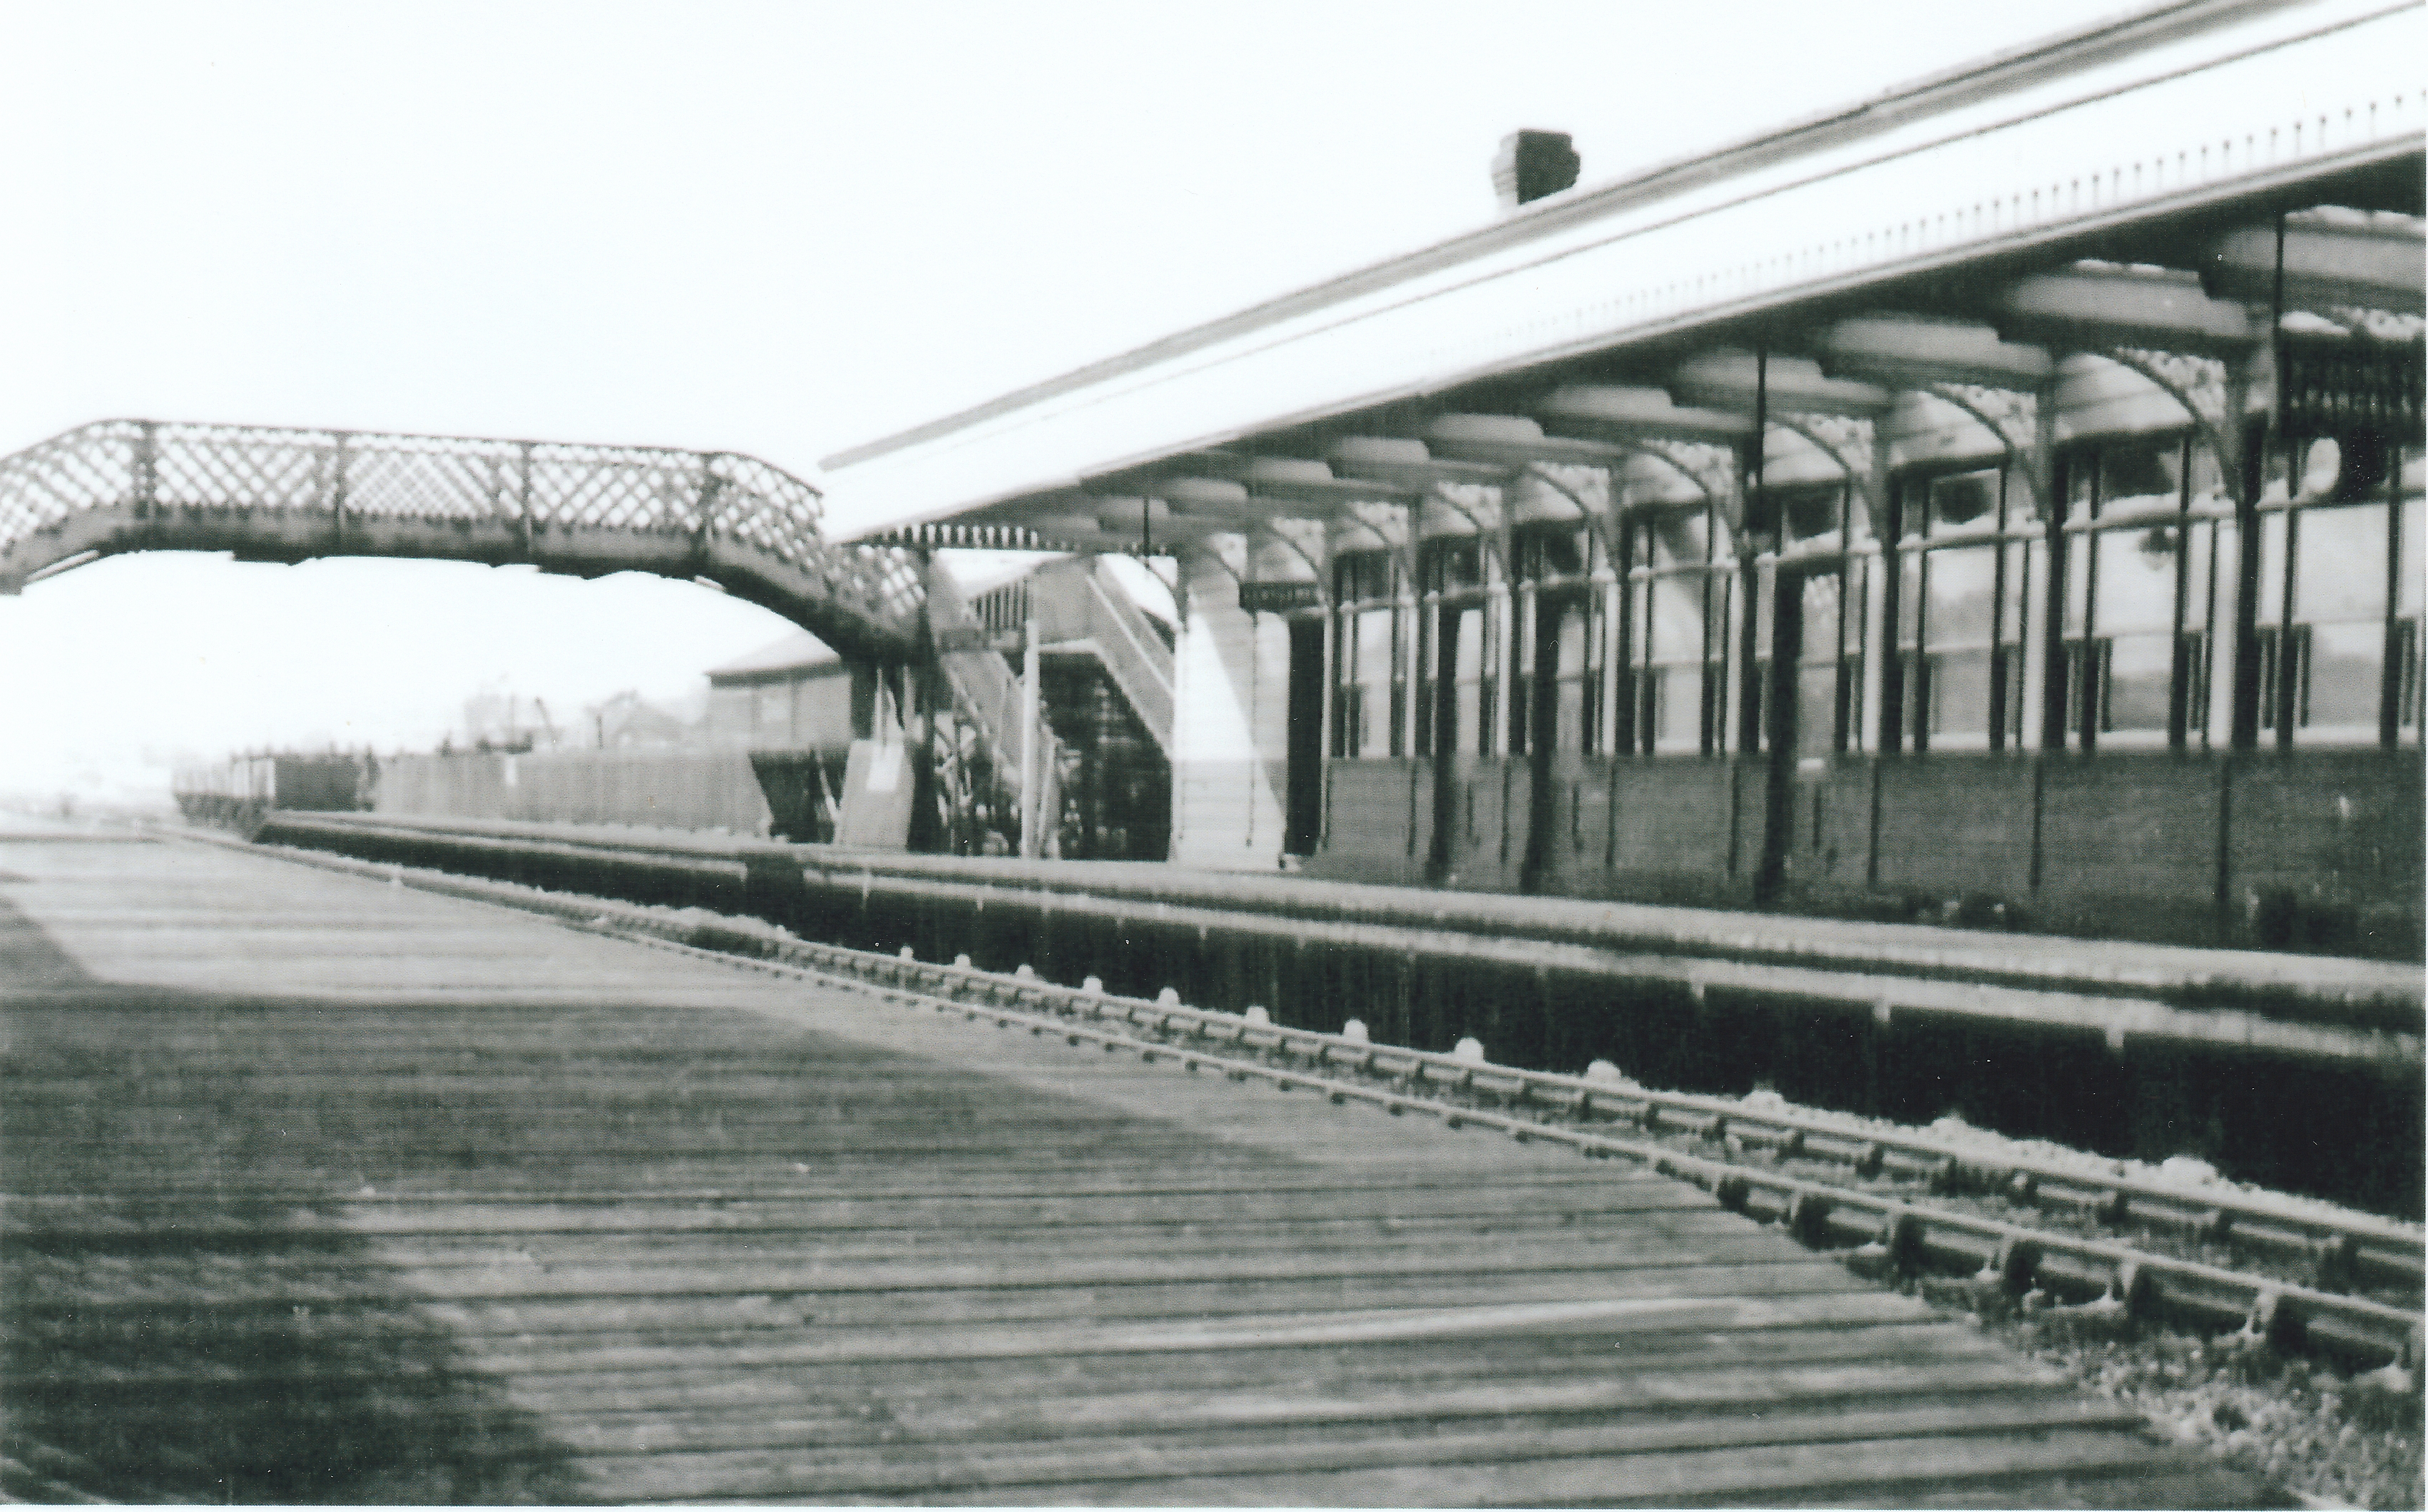 Daventry railway station